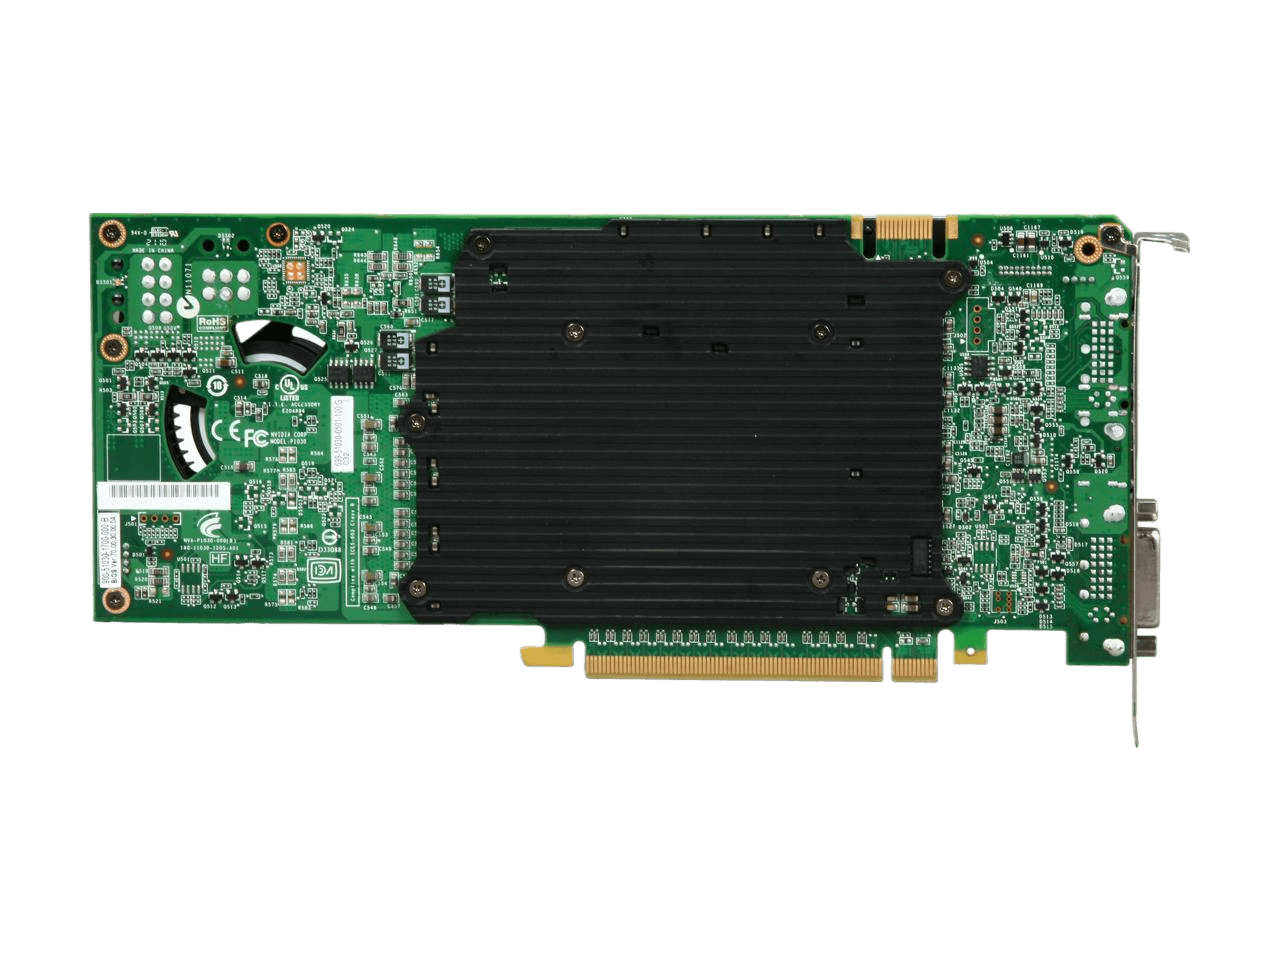 Dell NVIDIA Quadro 5000 Graphics Card 2.5GB GDDR5 Memory 320-Bit Video Card JFN25